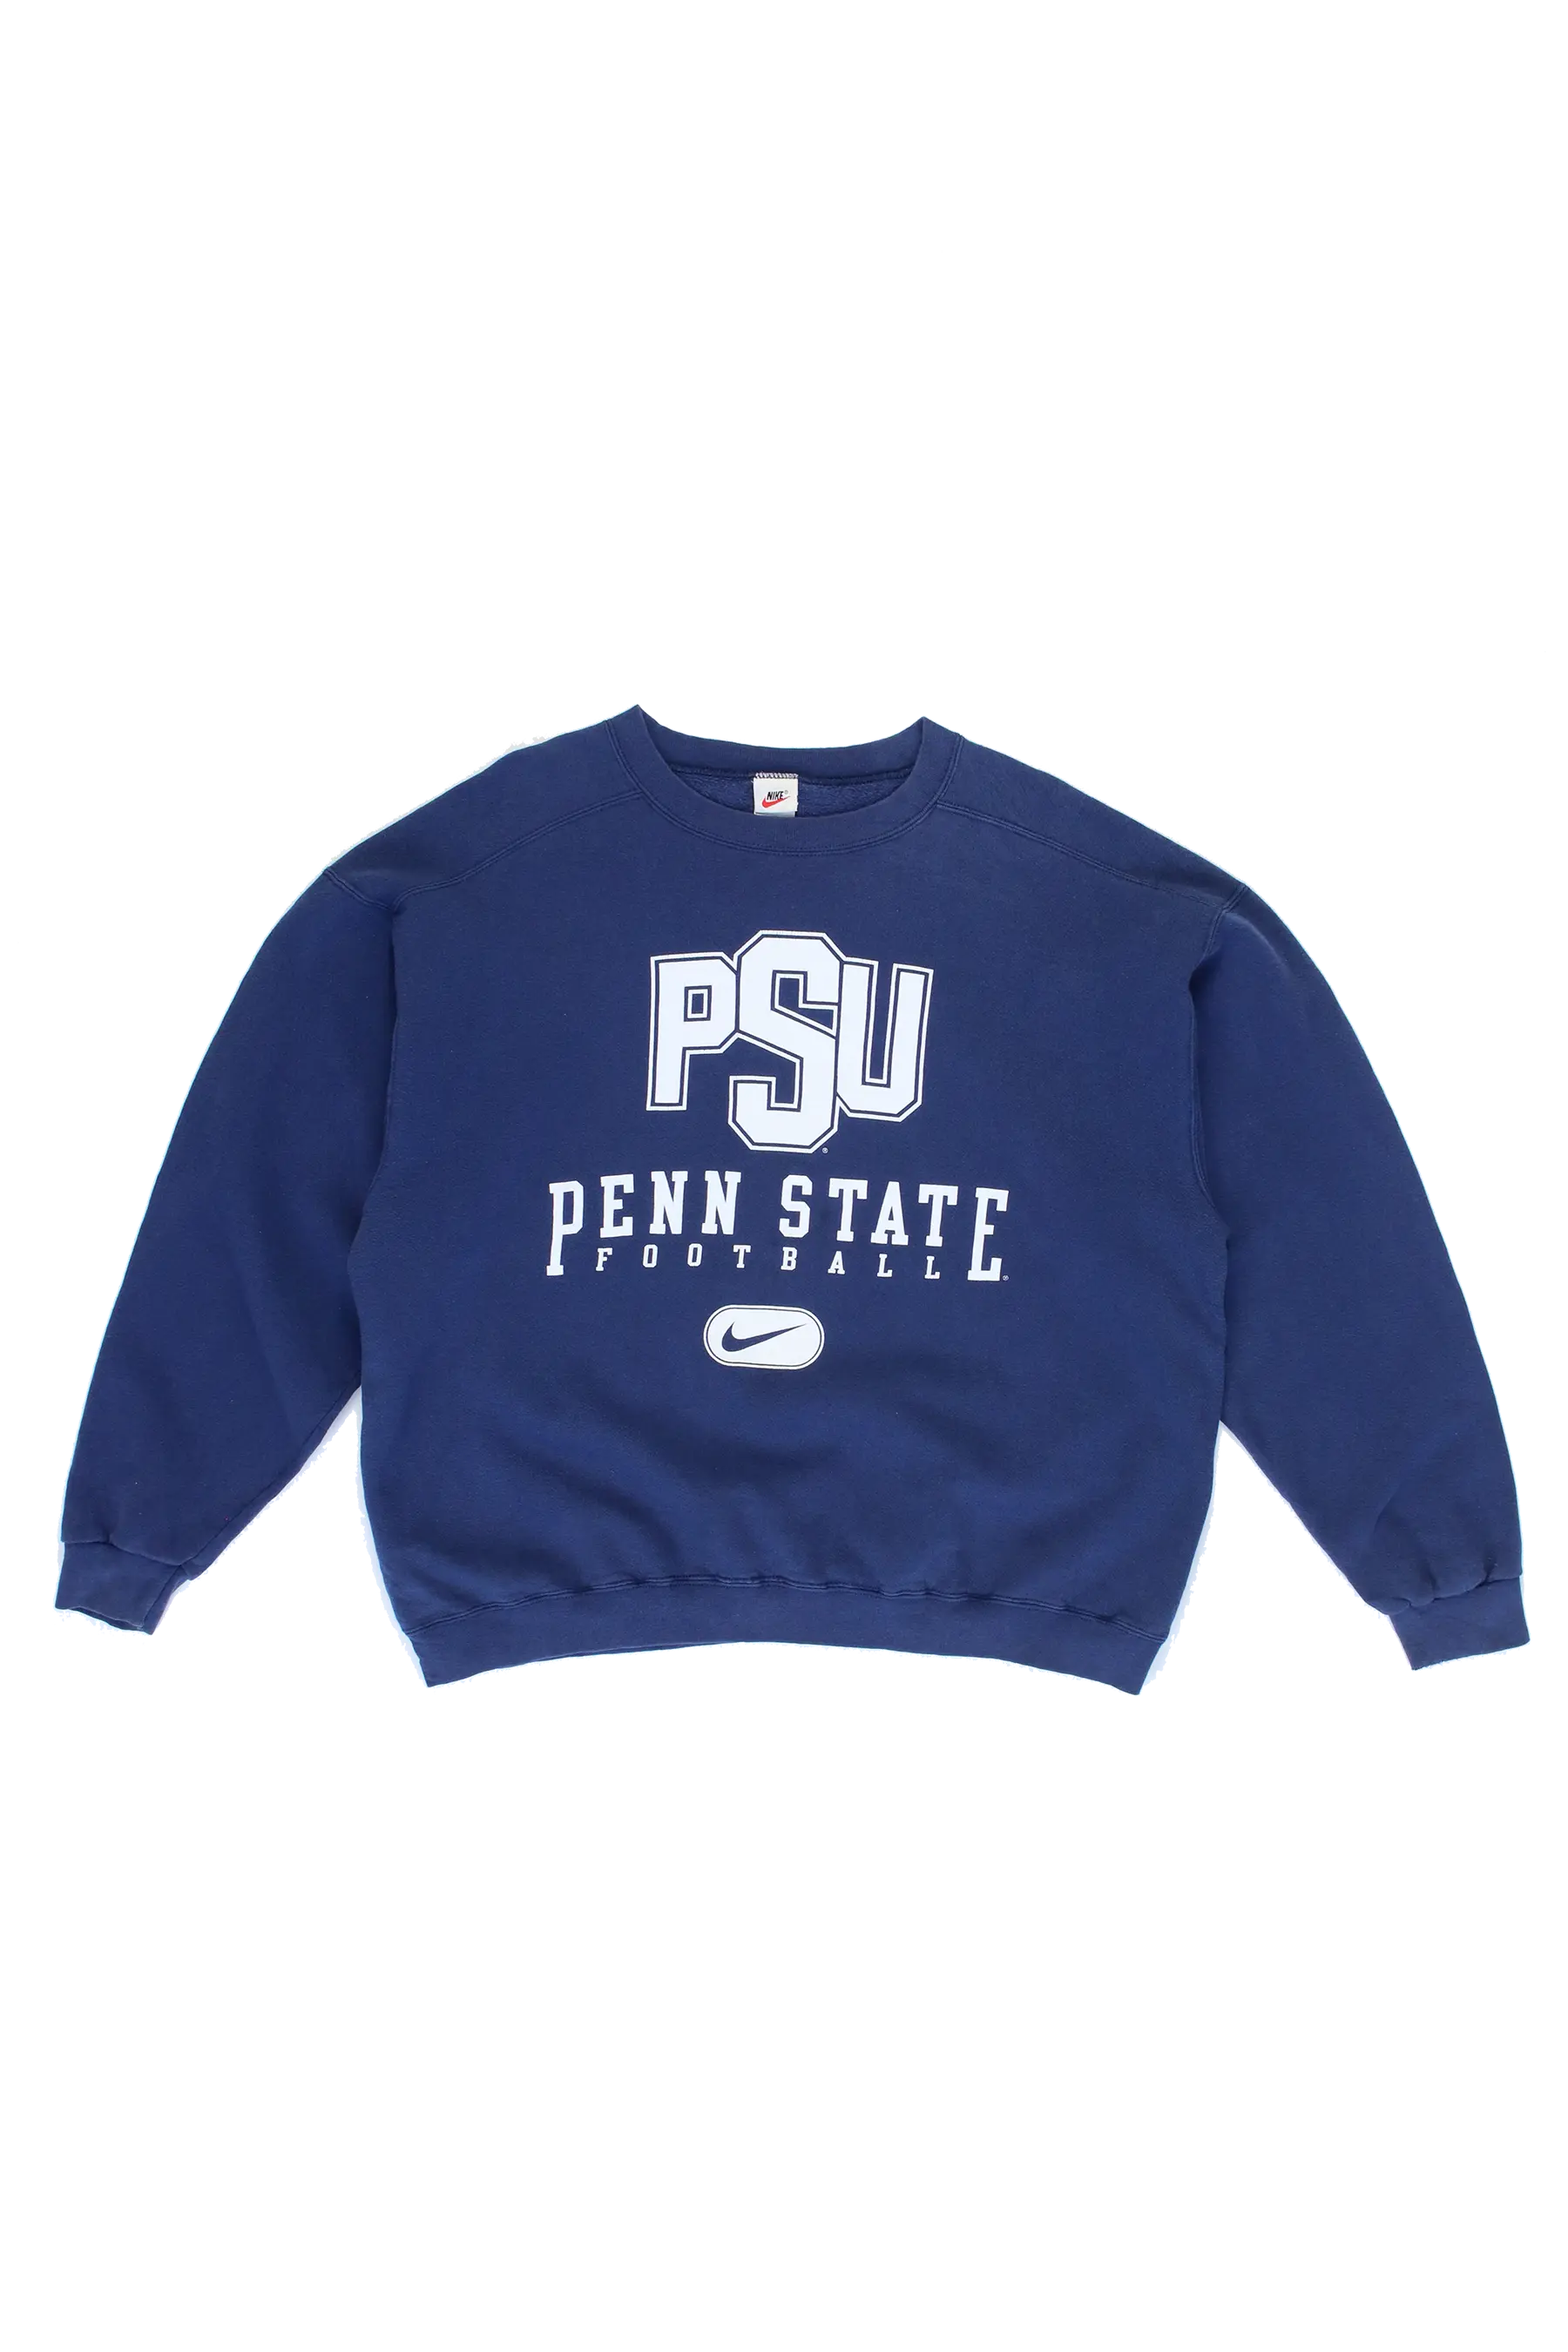 Nike Penn State Football Sweater